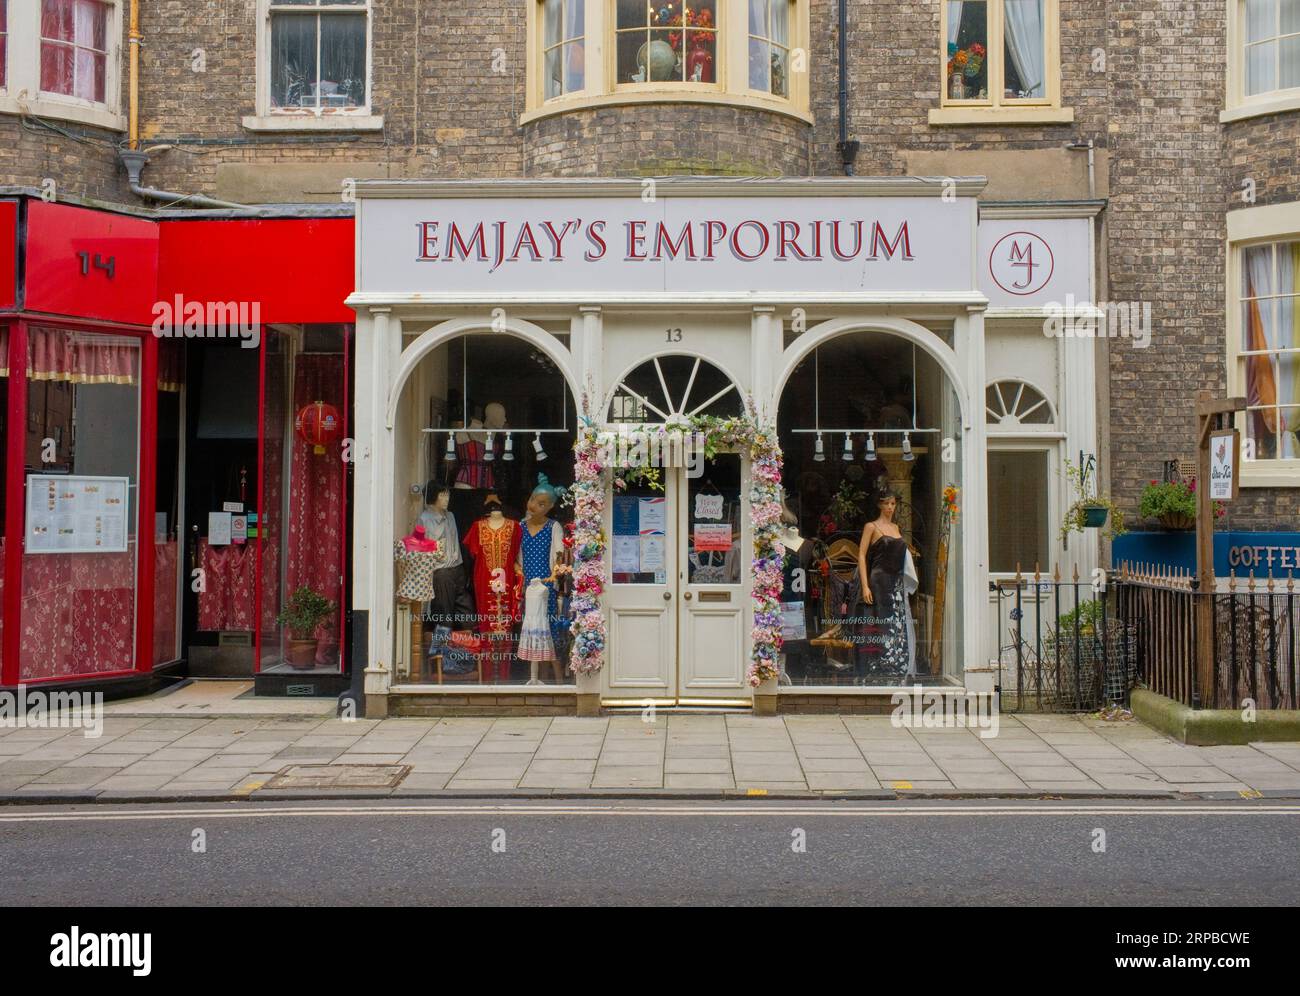 Emjay's Emporium vintage clothing shop in York Place, Scarborough Stock Photo